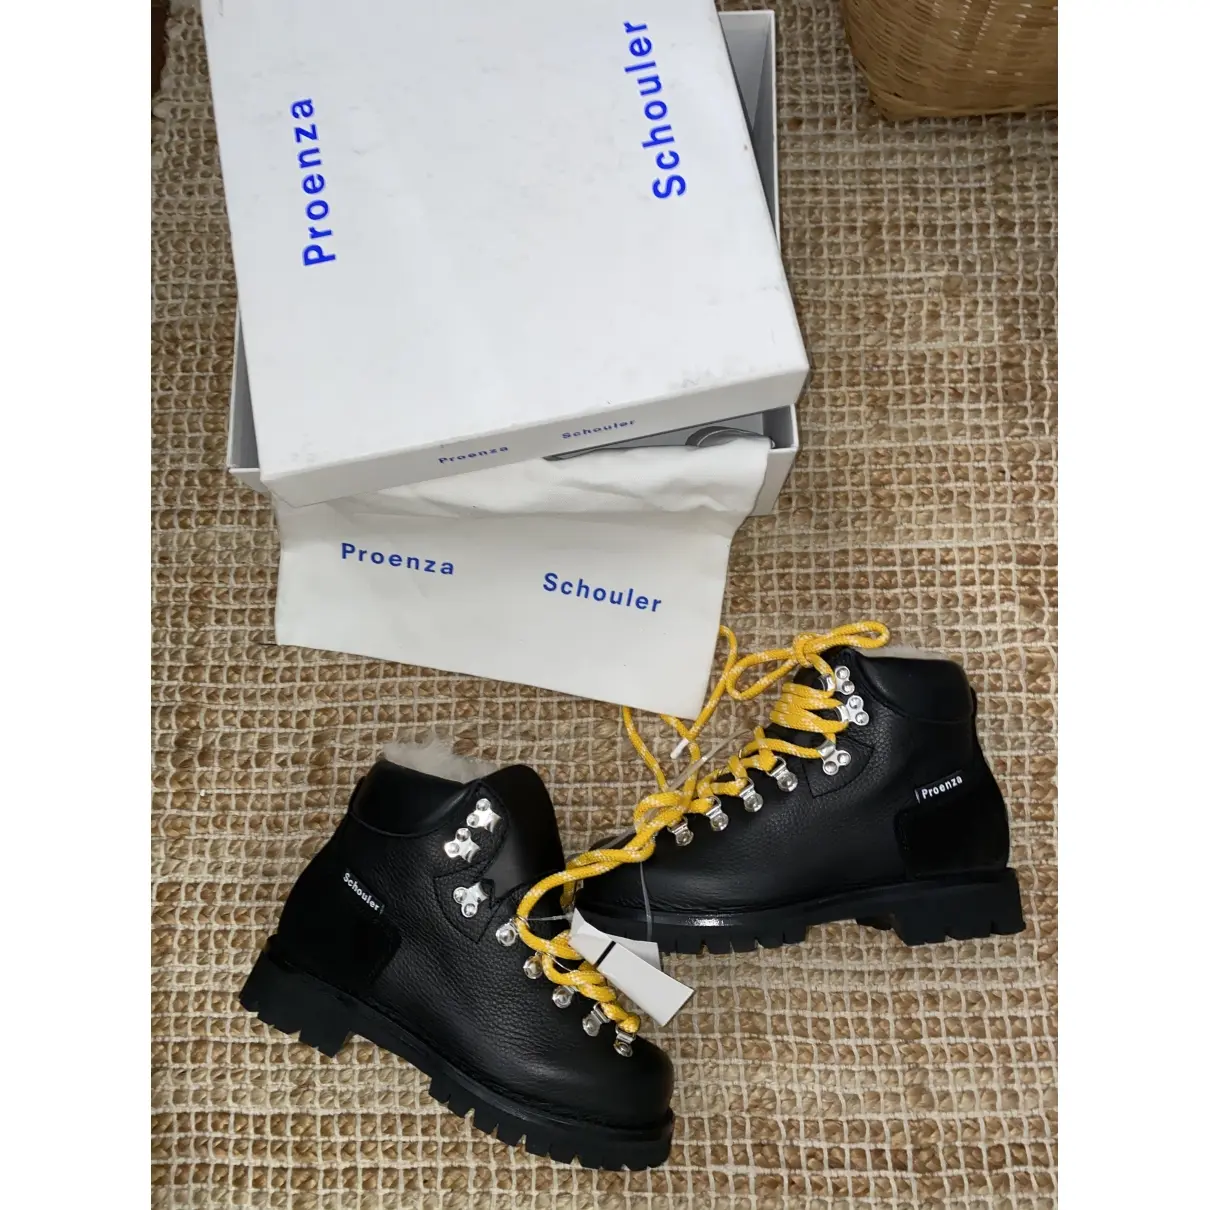 Buy Proenza Schouler Leather snow boots online